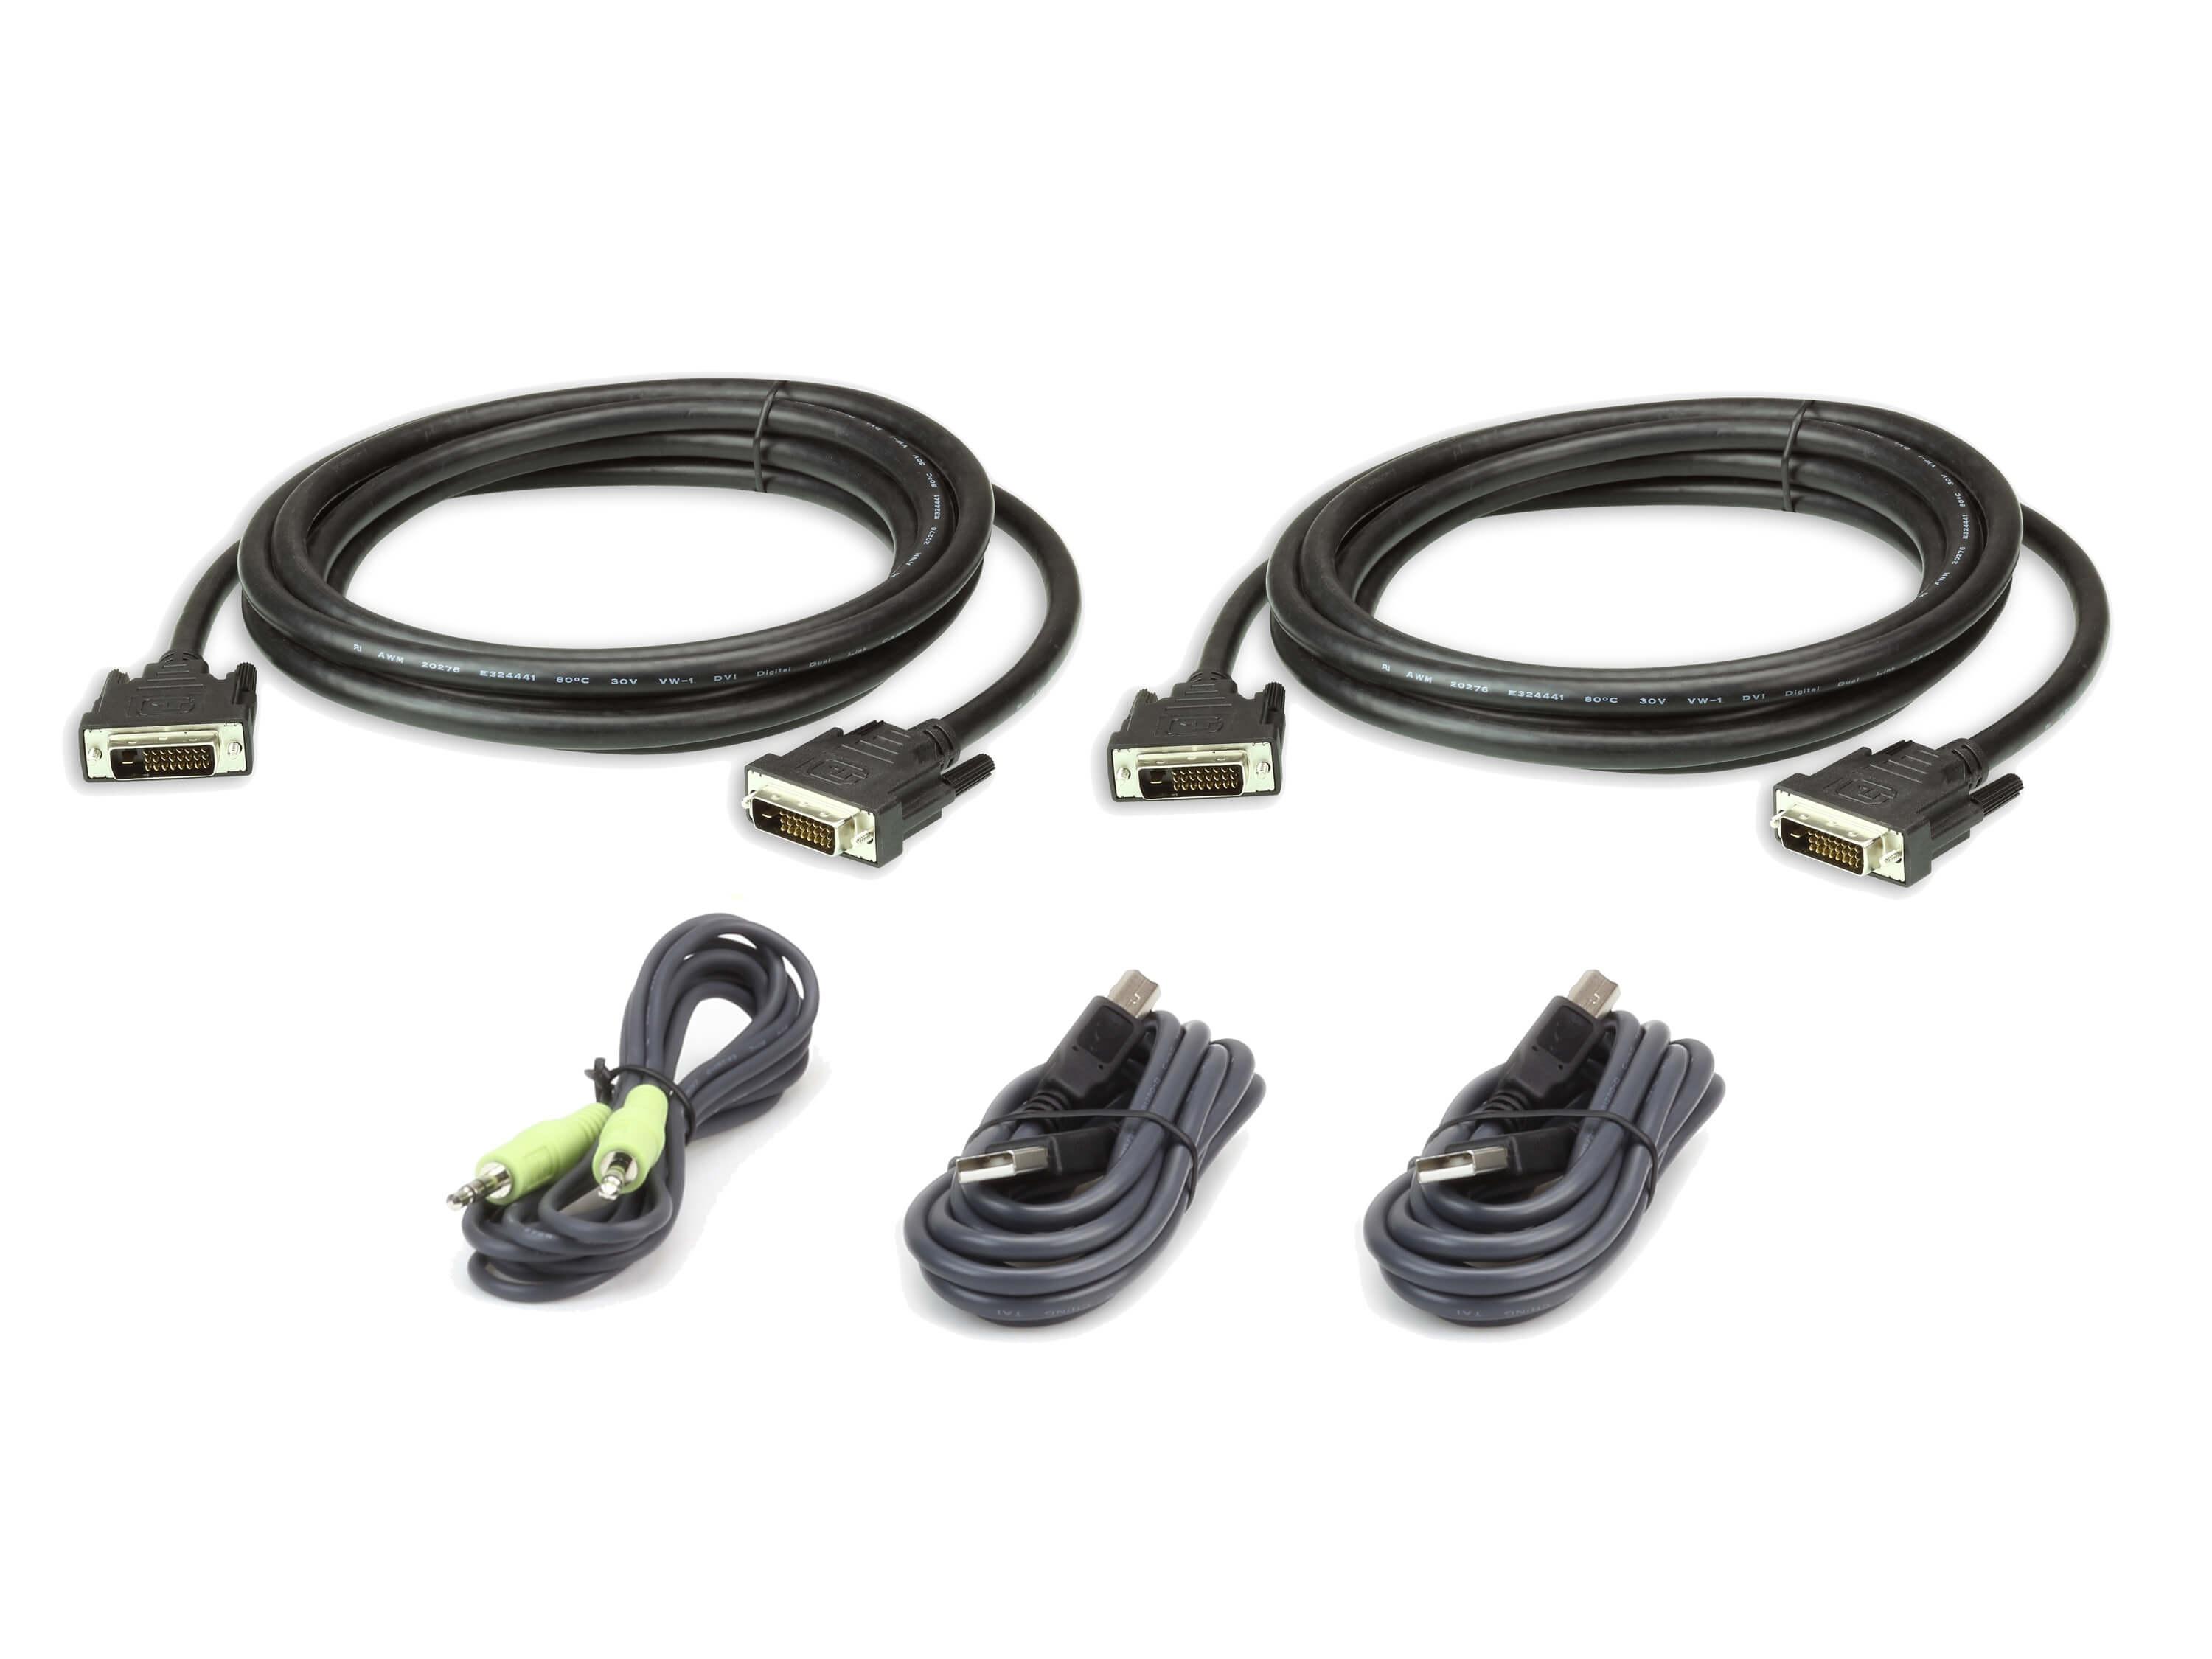 2L-7D03UDX5 3m USB DVI-D Dual Link Dual Display Secure KVM Cable Kit by Aten